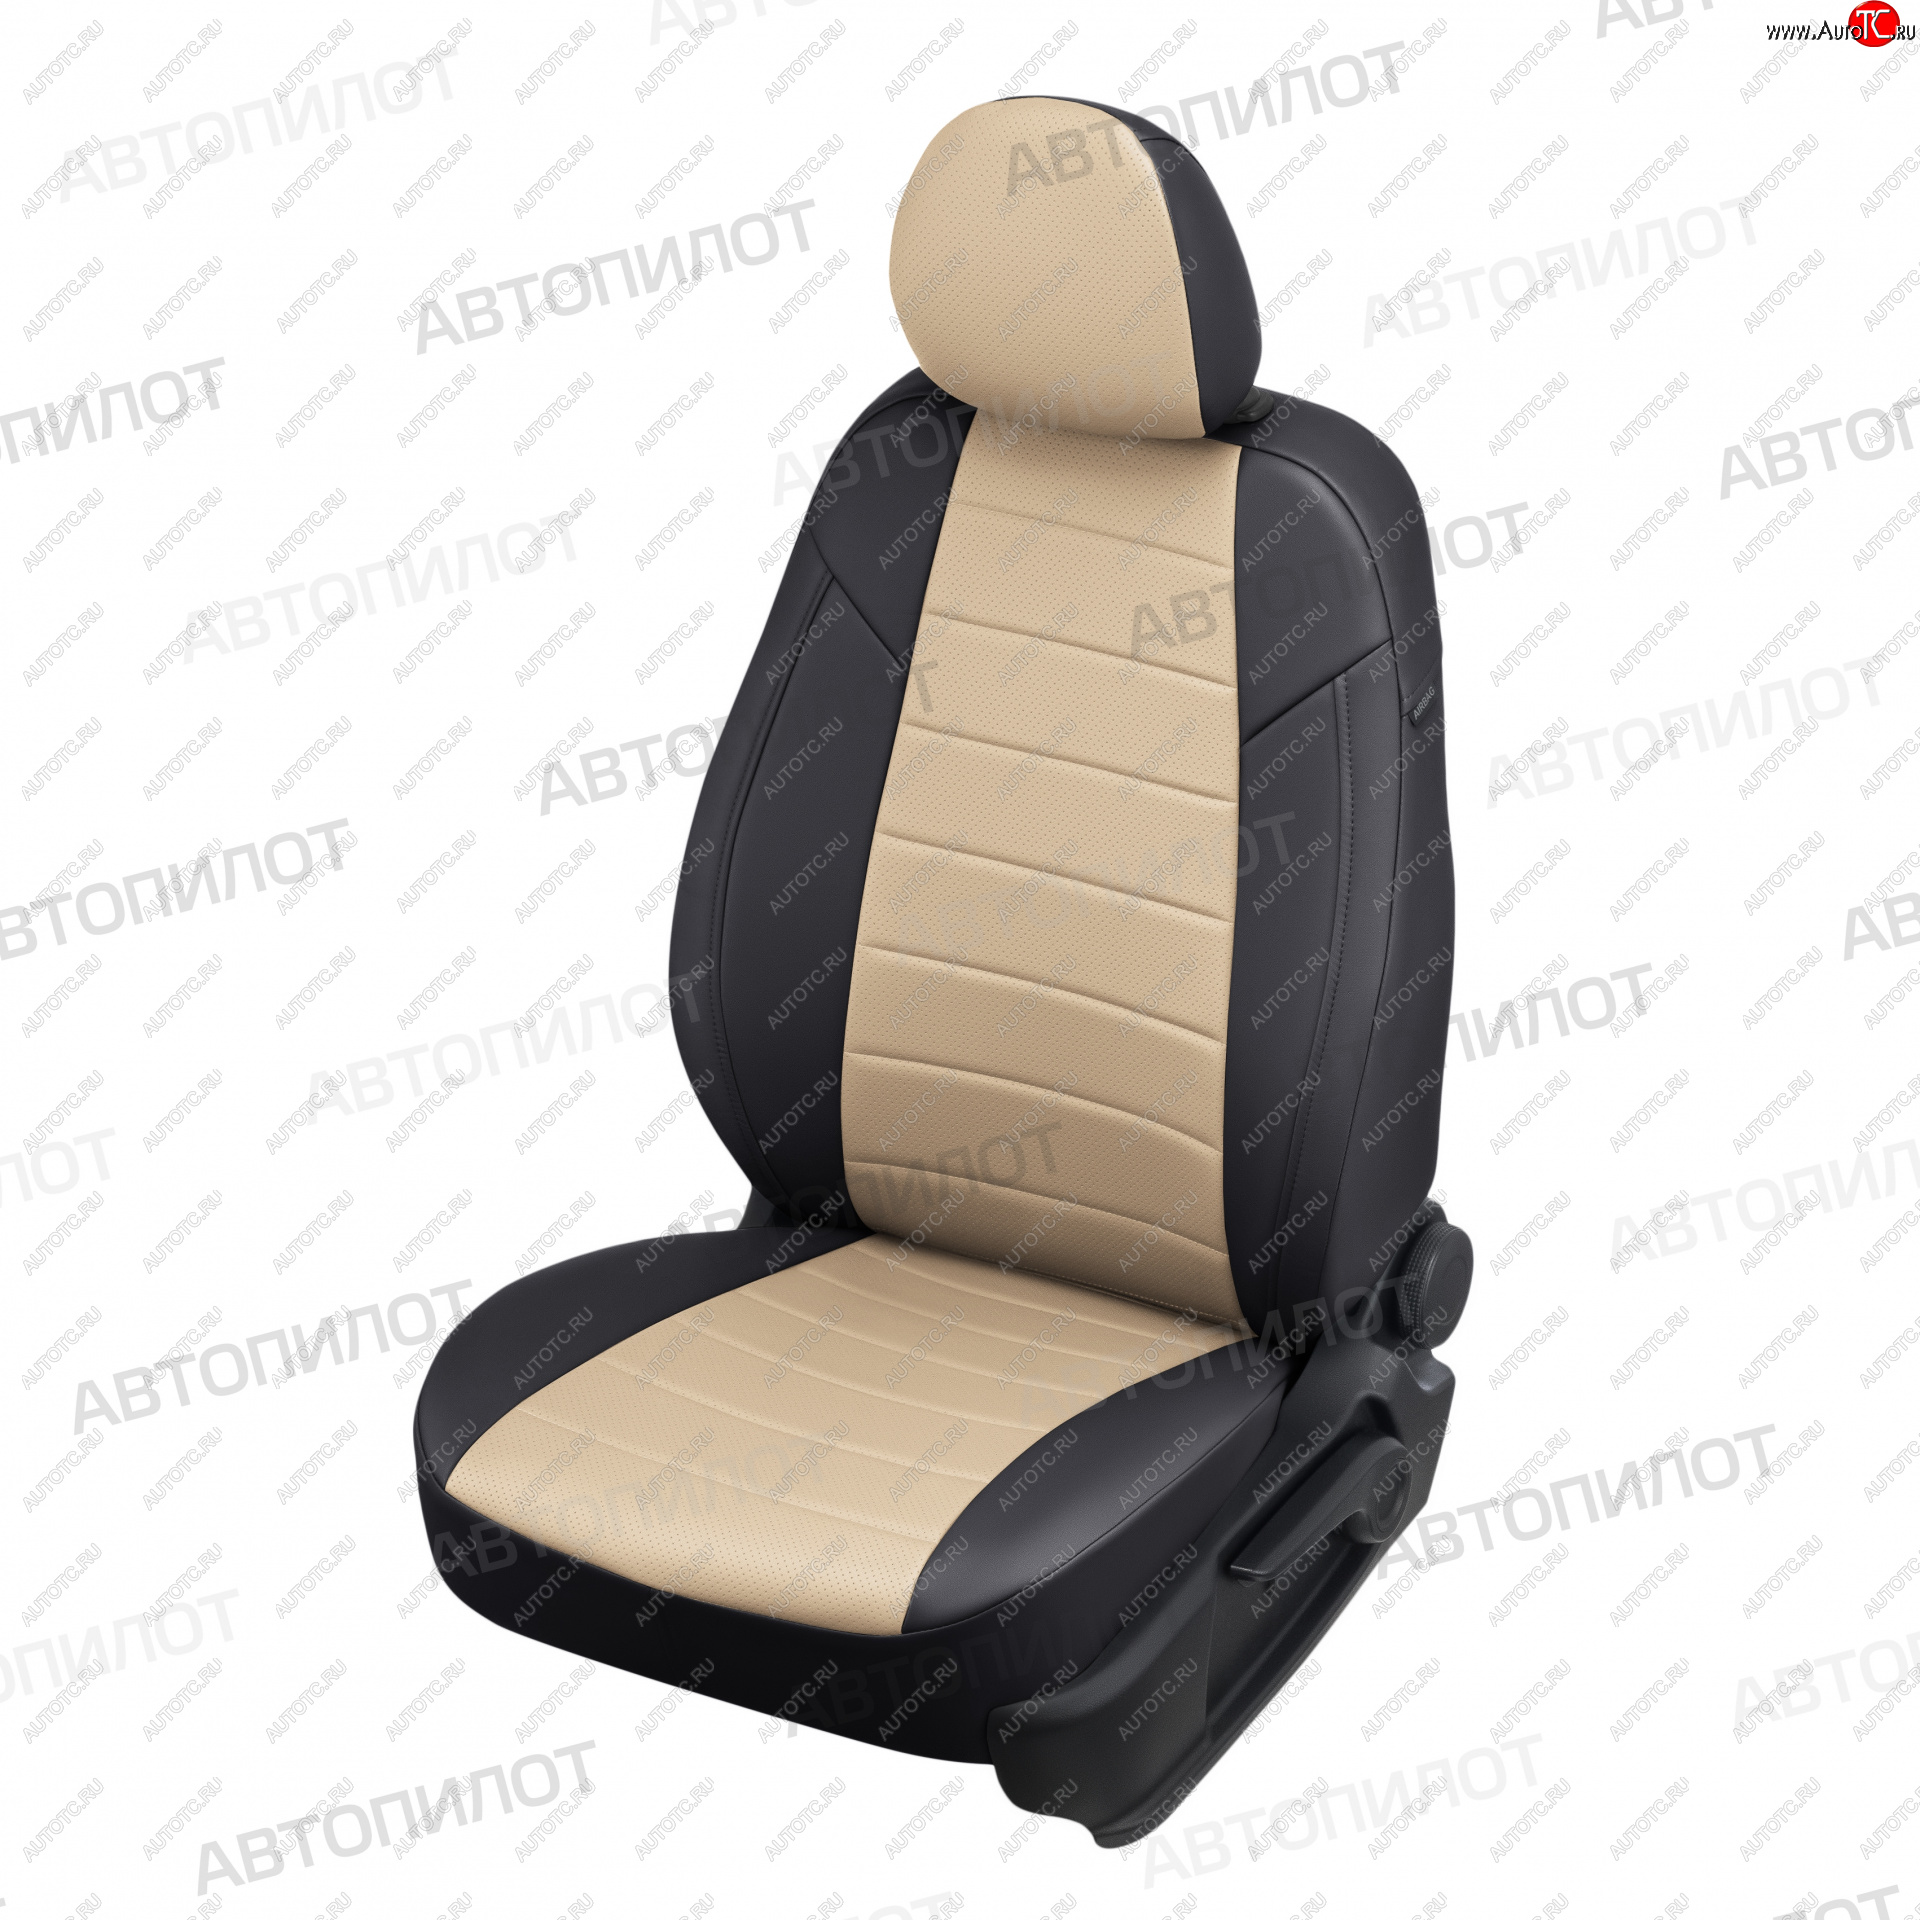 7 499 р. Чехлы сидений (экокожа) Автопилот  Honda CR-V  RD4,RD5,RD6,RD7,RD9  (2001-2006) (черный/бежевый)